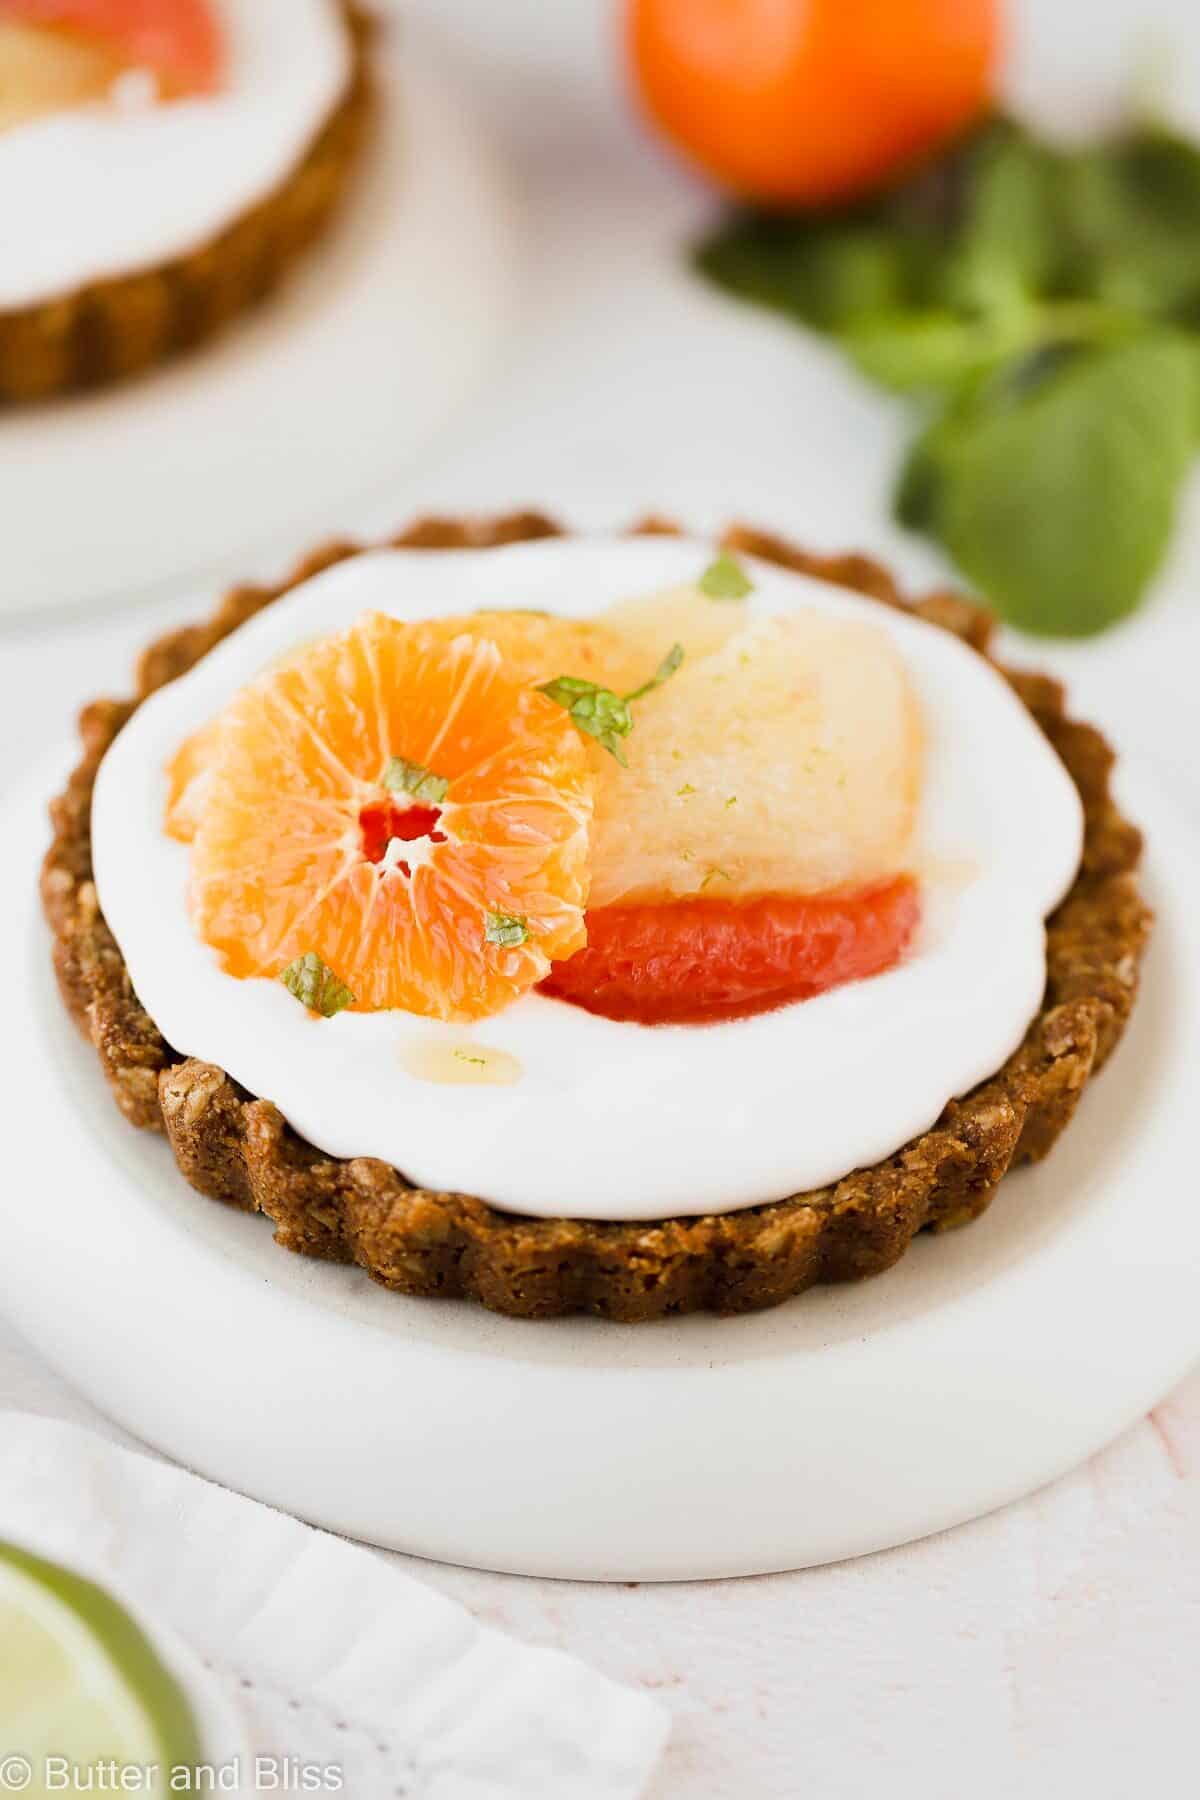 Healthier fruit dessert on a plate